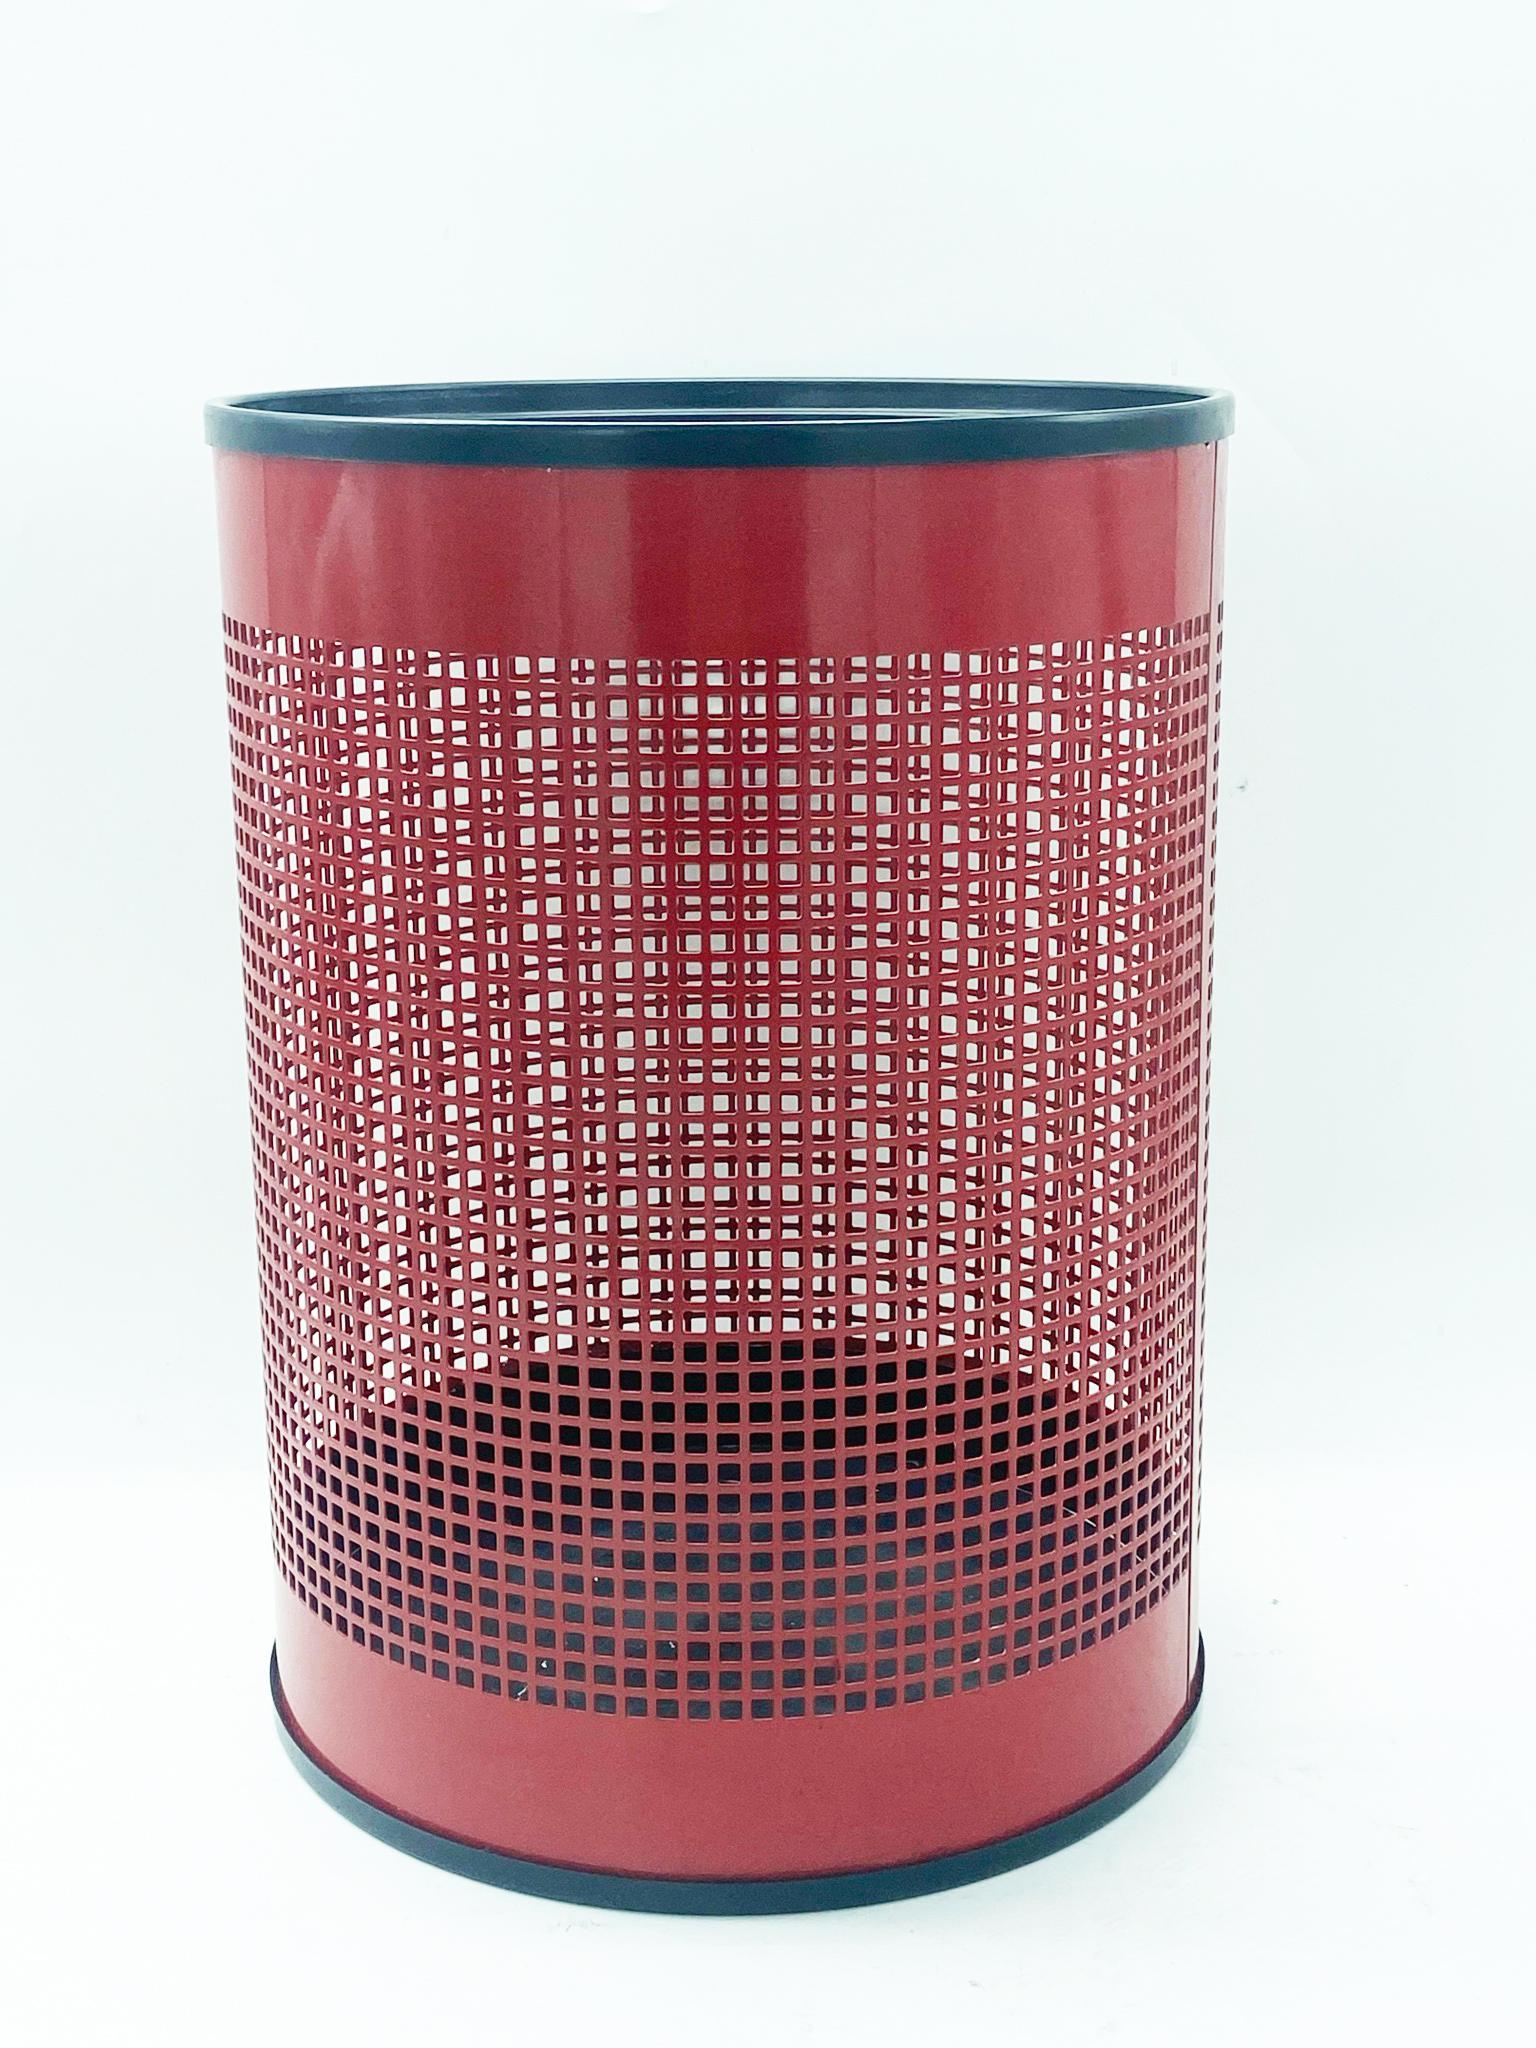 Red lacquered metal waste paper basket, Designer Josef Hoffmann, Manufacturer Bieffeplast, 70's.